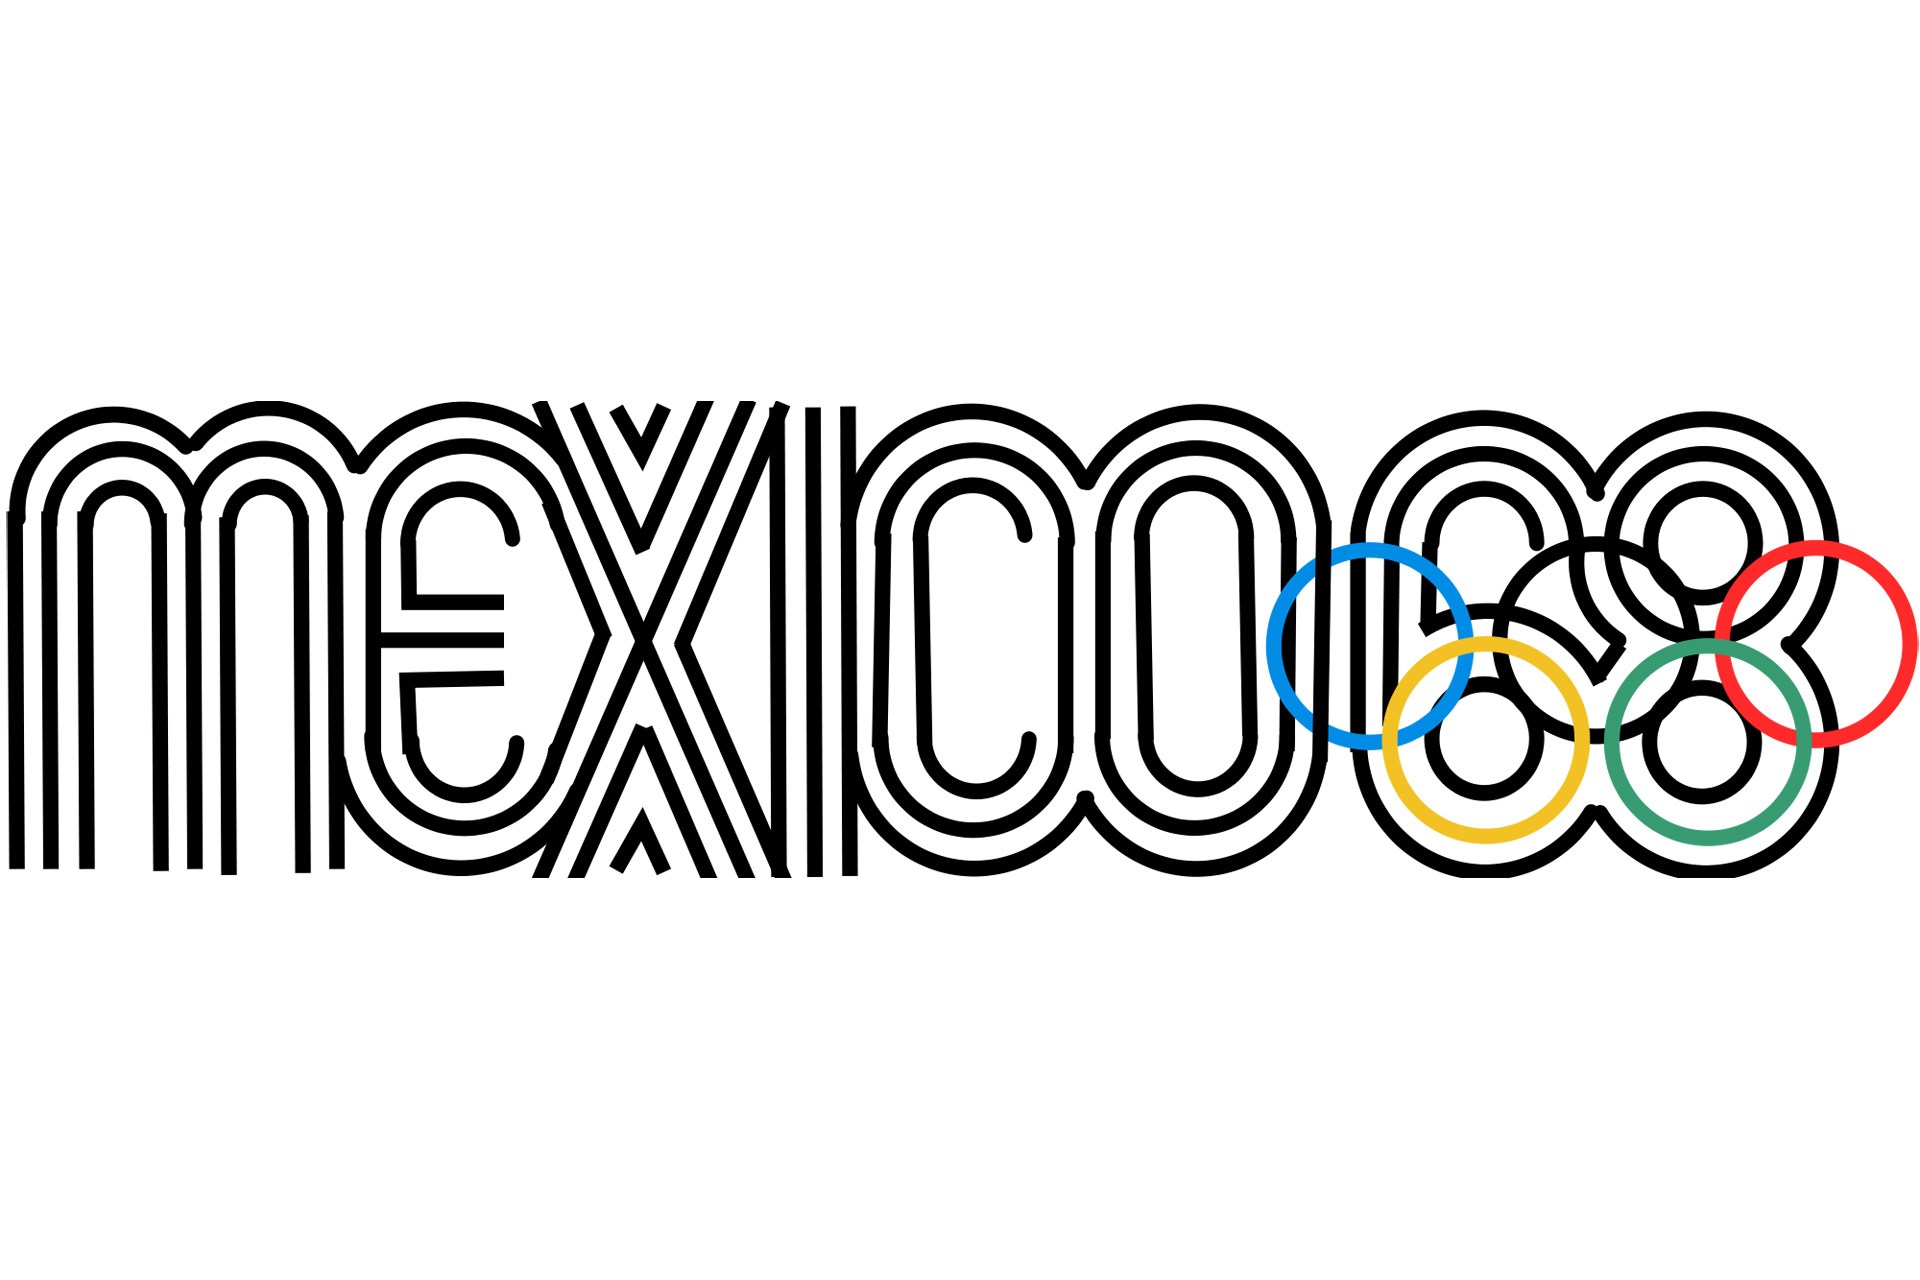 thm-Mexico1968_logo-1.jpg